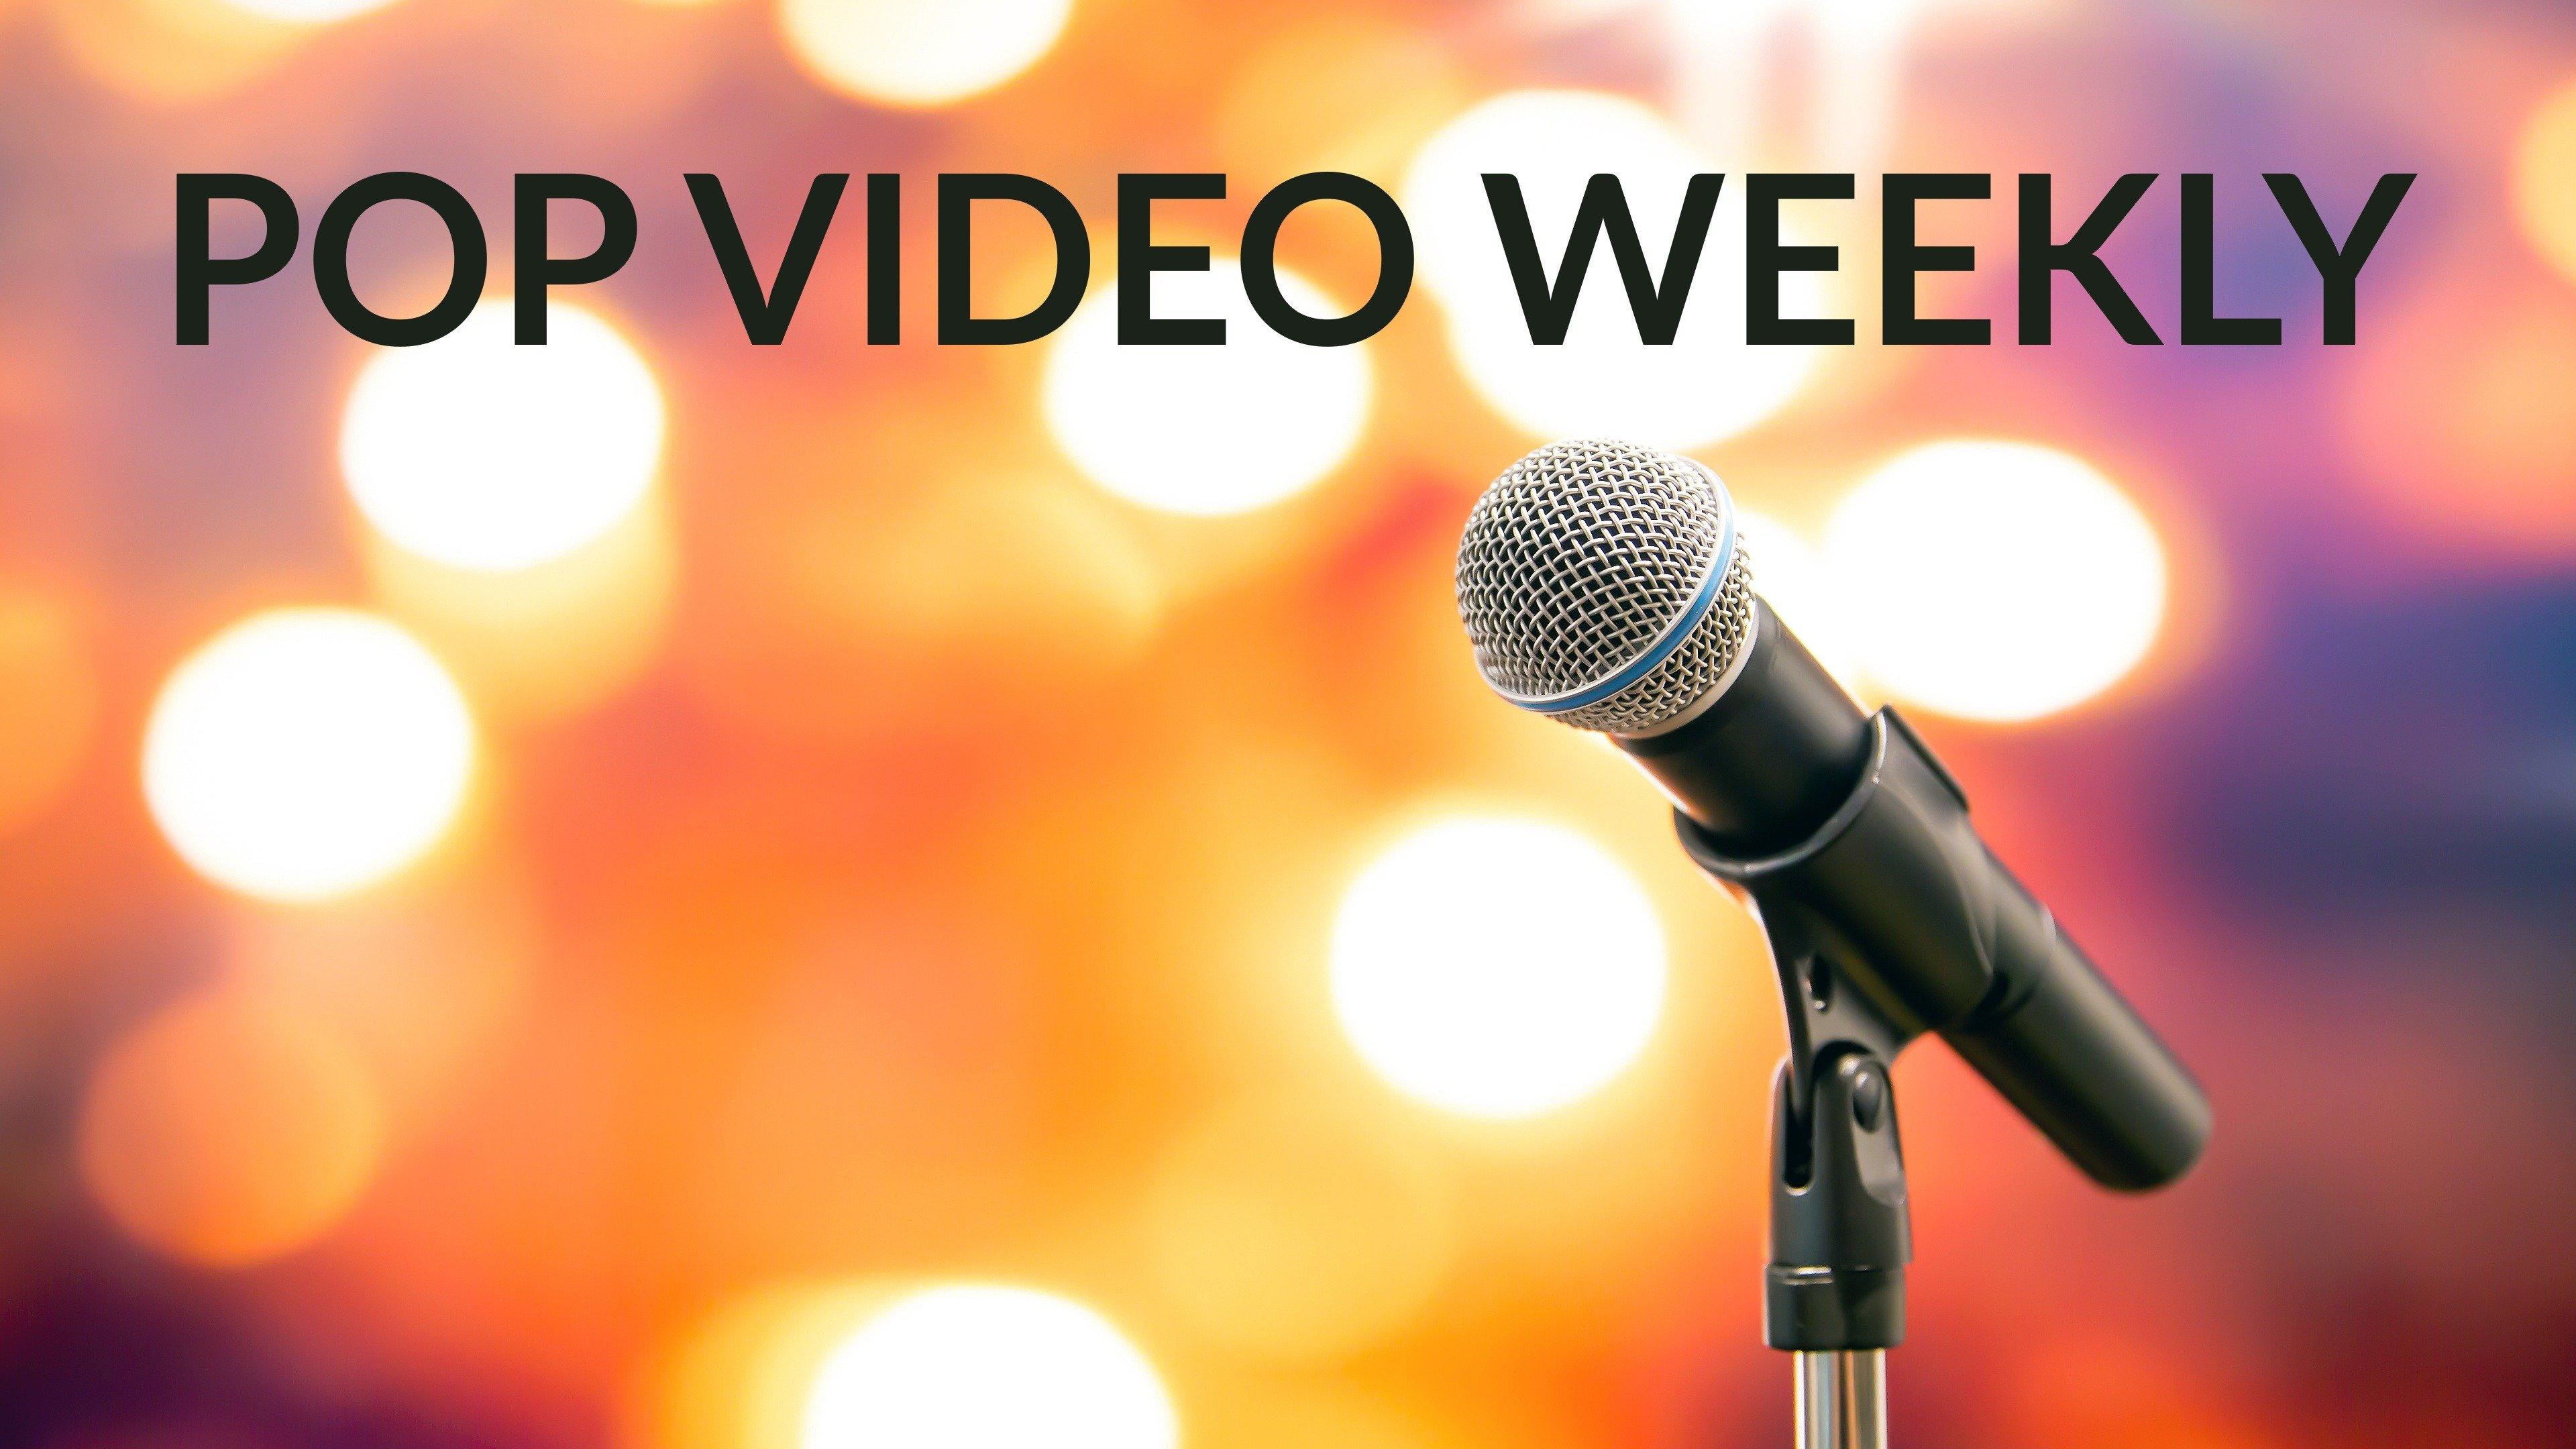 Watch Pop Video Weekly Streaming Online on Philo (Free Trial)